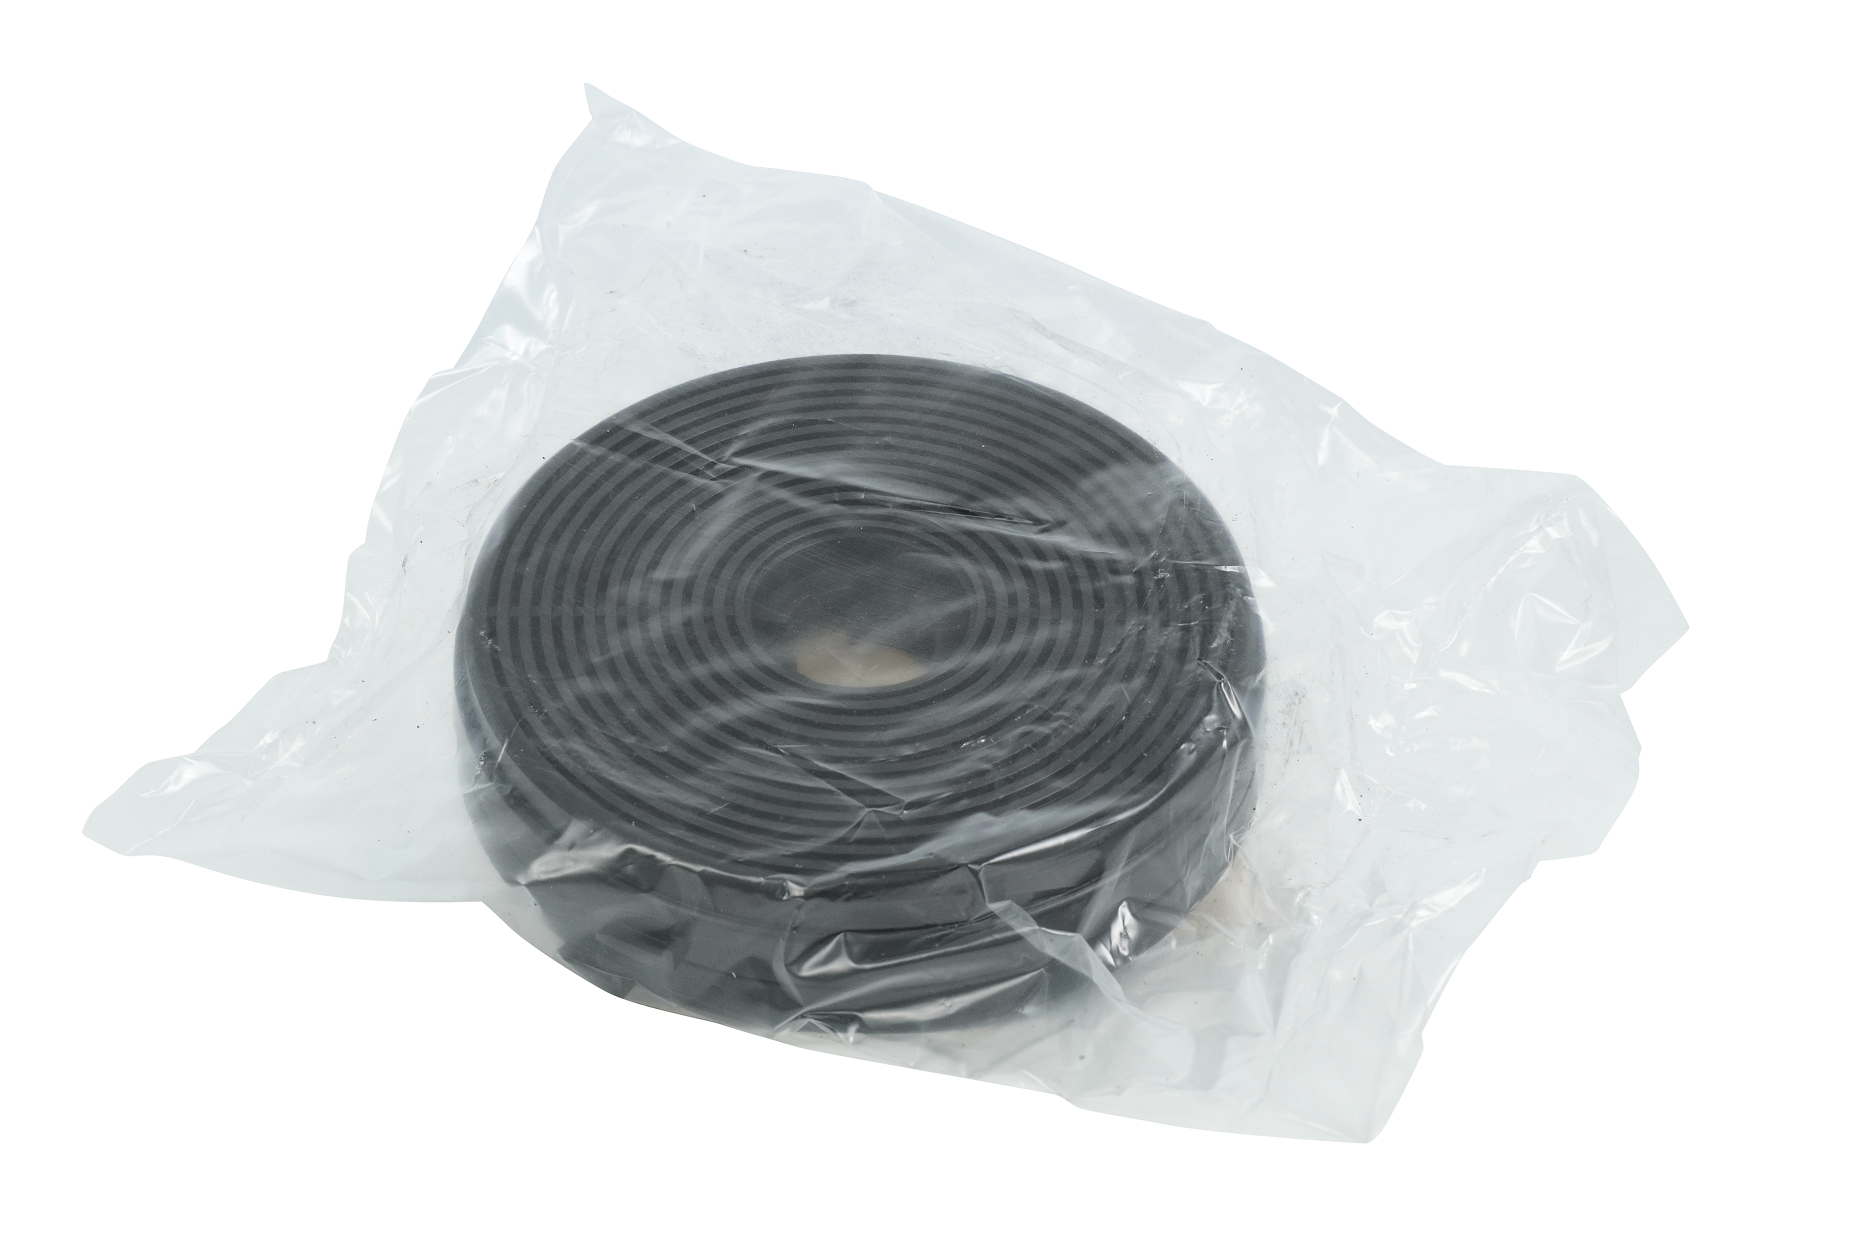 respekta active charcoal filter Active charcoal filter for recirculation cooker bonnet MIZ 6000